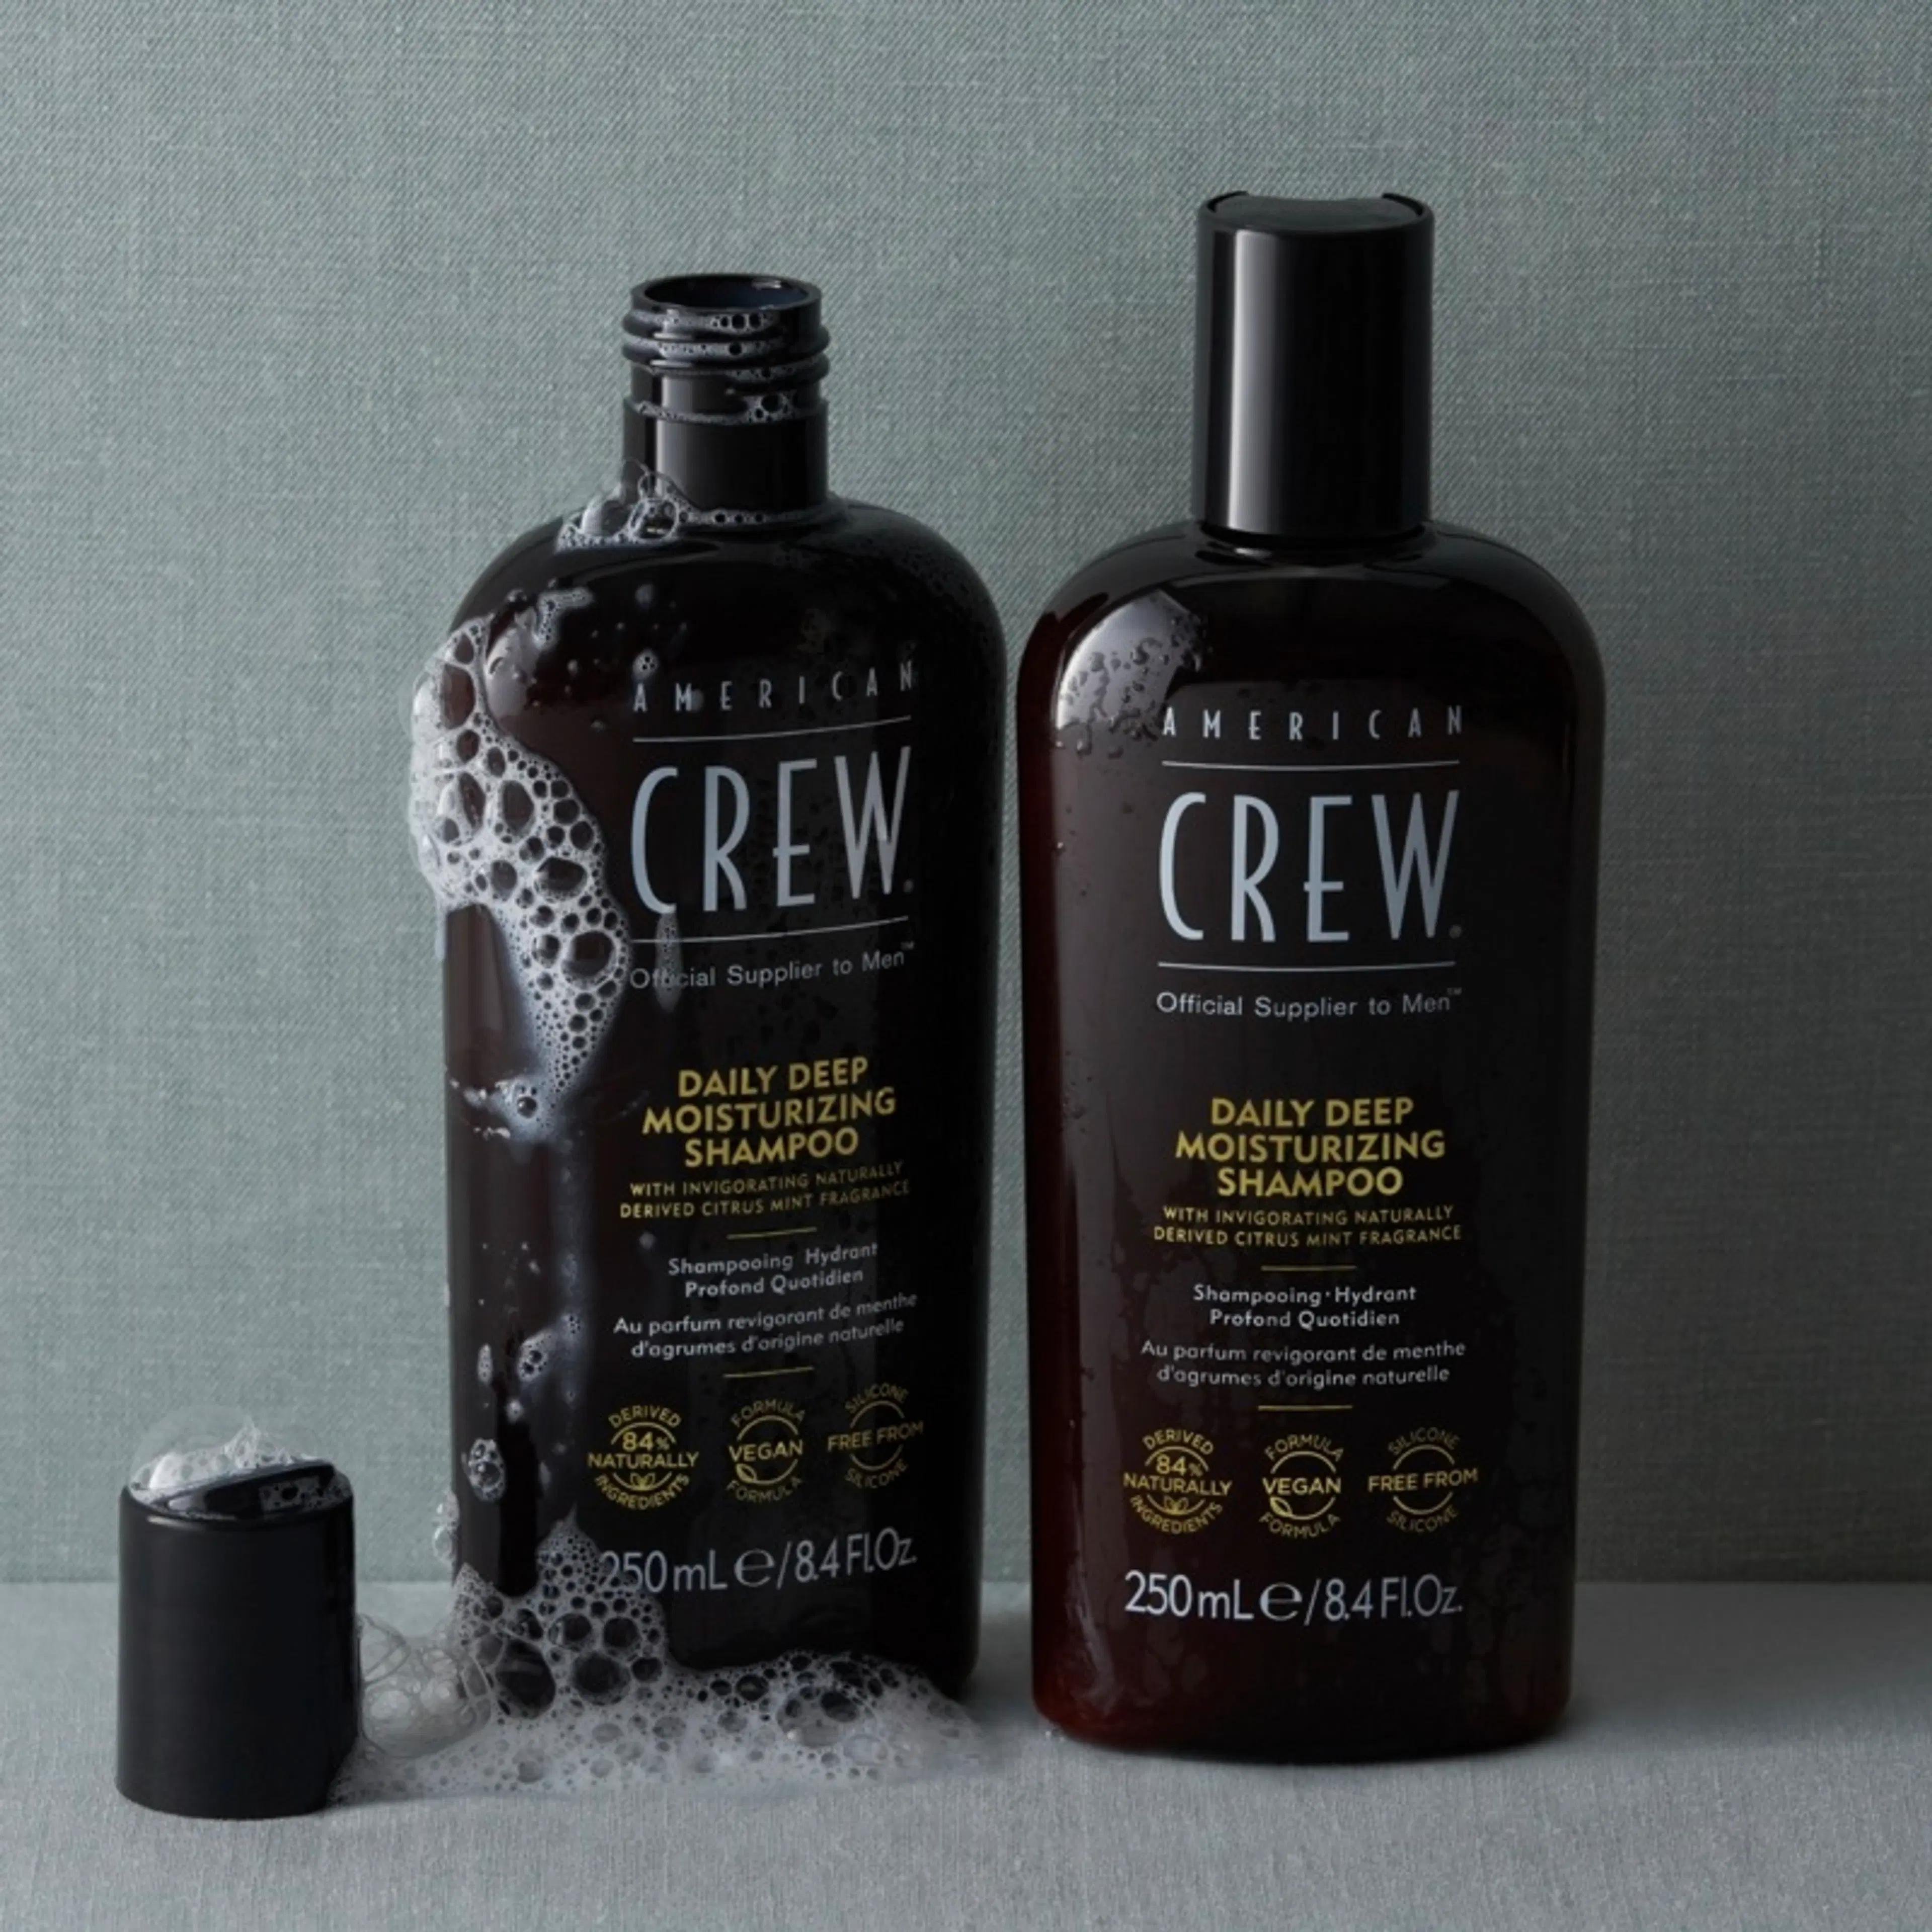 American Crew Daily Deep Moisturizing Shampoo 250 ml